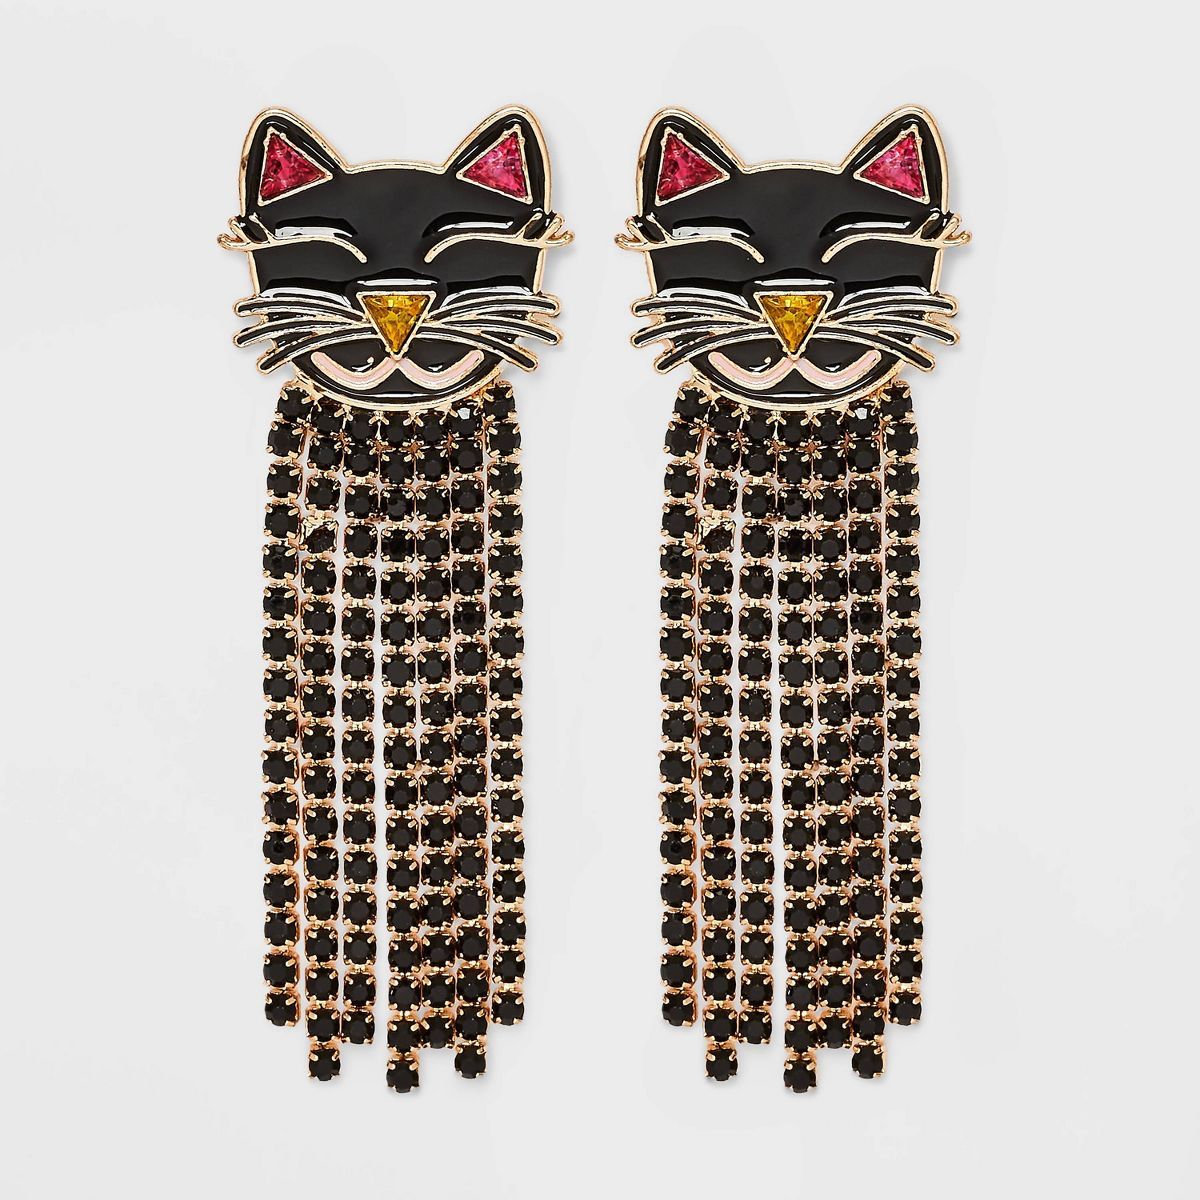 SUGARFIX by BaubleBar "Scaredy Cat" Halloween Statement Earrings - Black | Target